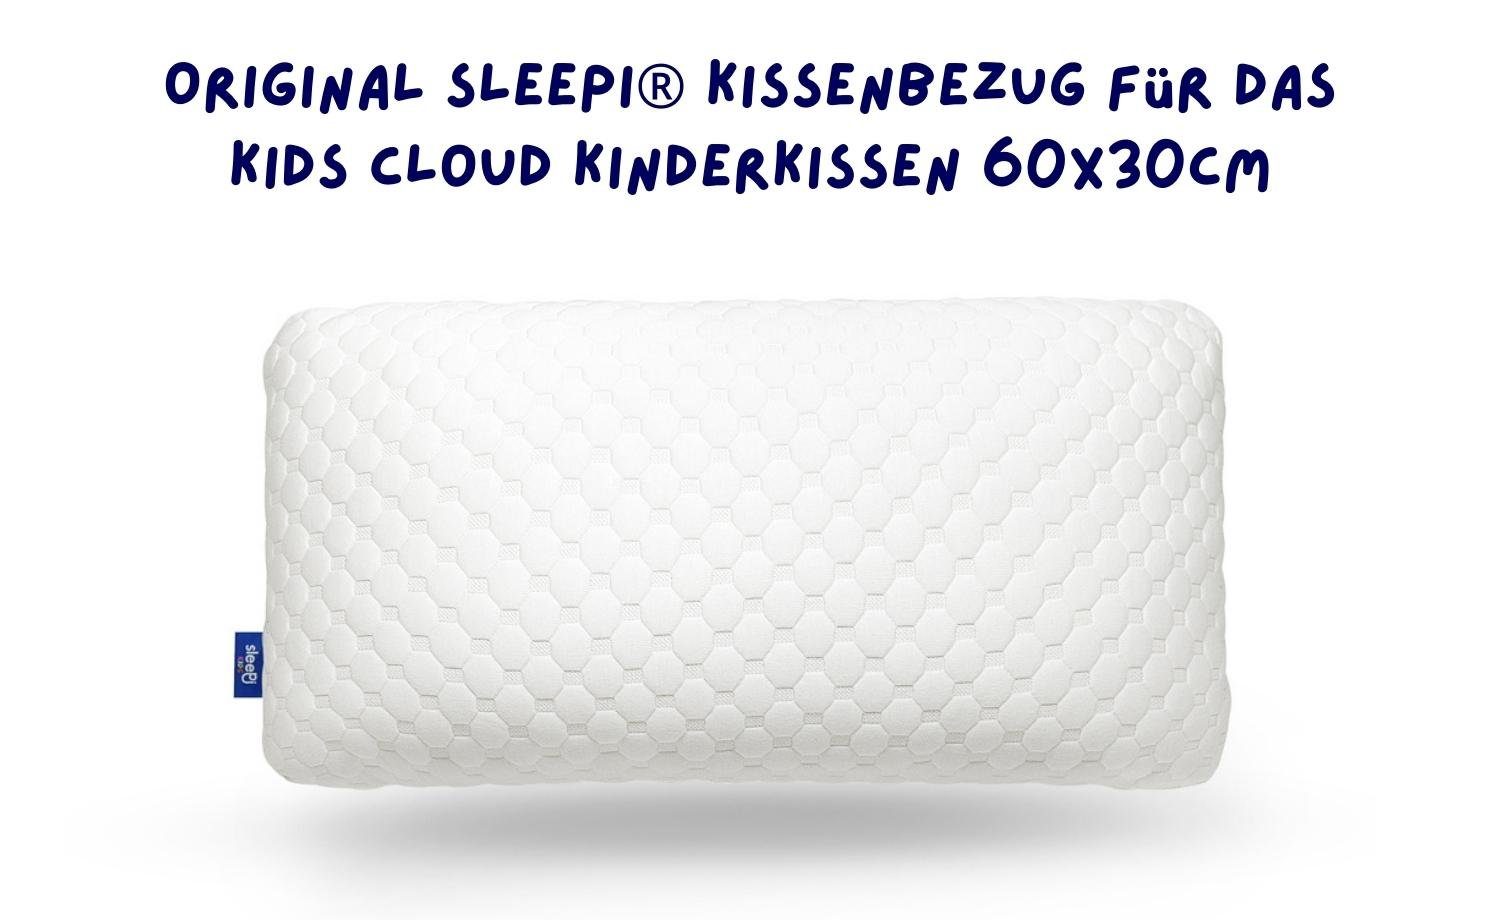 Kissenbezug, Sleepi 60x30cm Kids Kissenbezug Cloud Ersatz Cloud Kissenbezug SLEEPI, für Kids